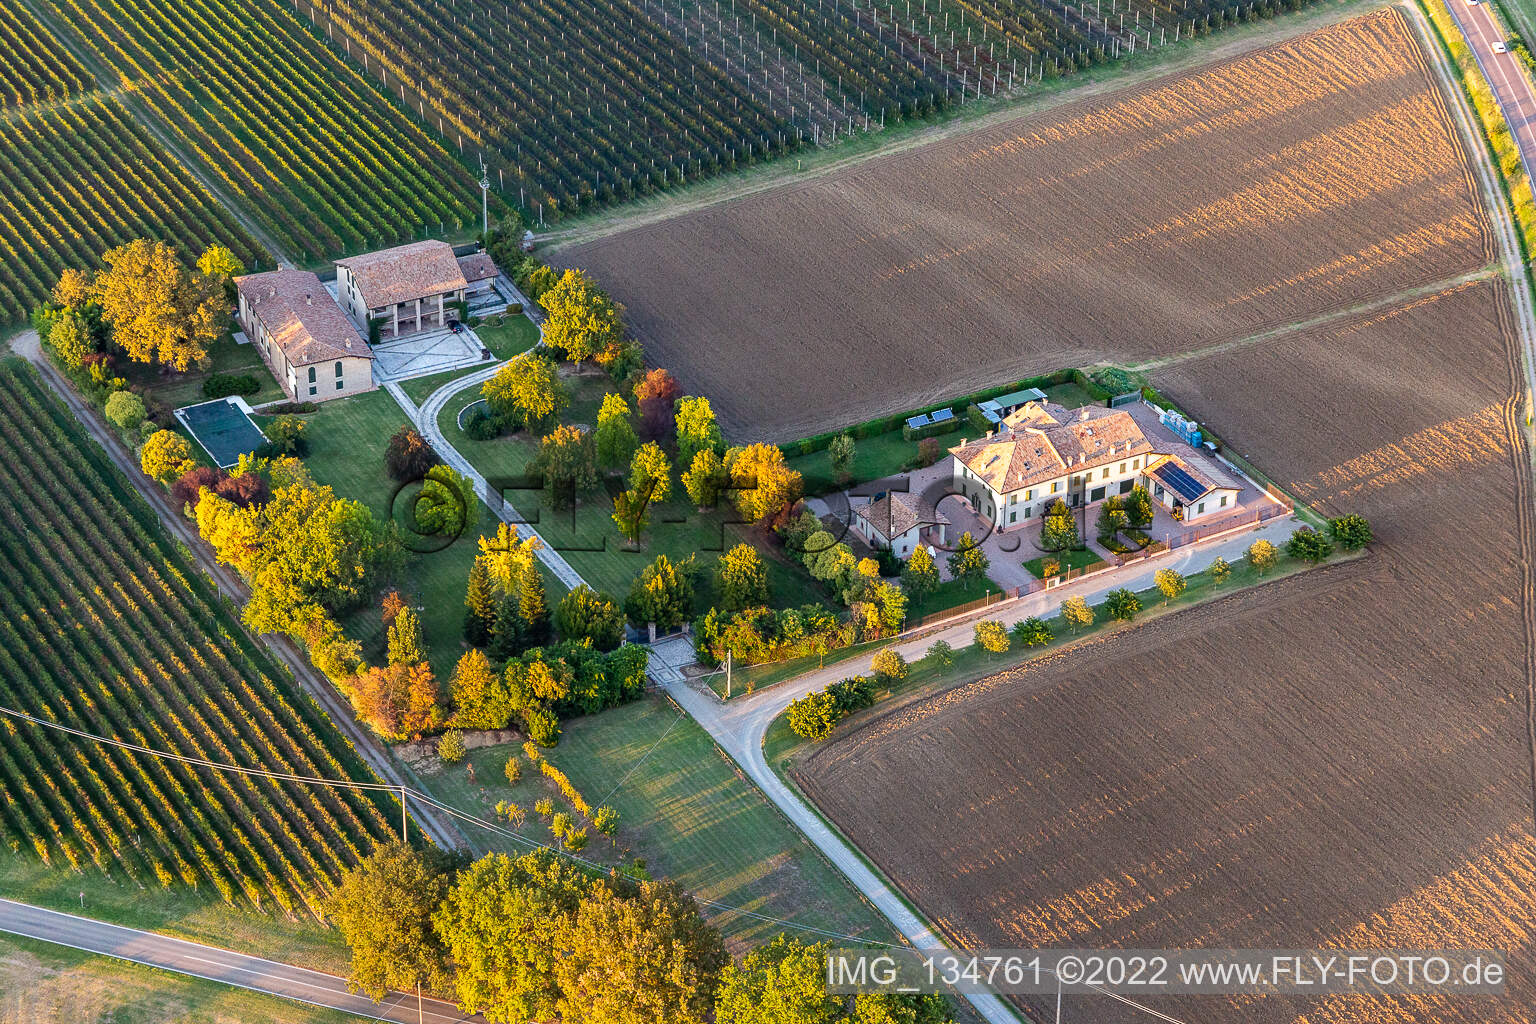 Aerial photograpy of Scandiano in the state Reggio Emilia, Italy